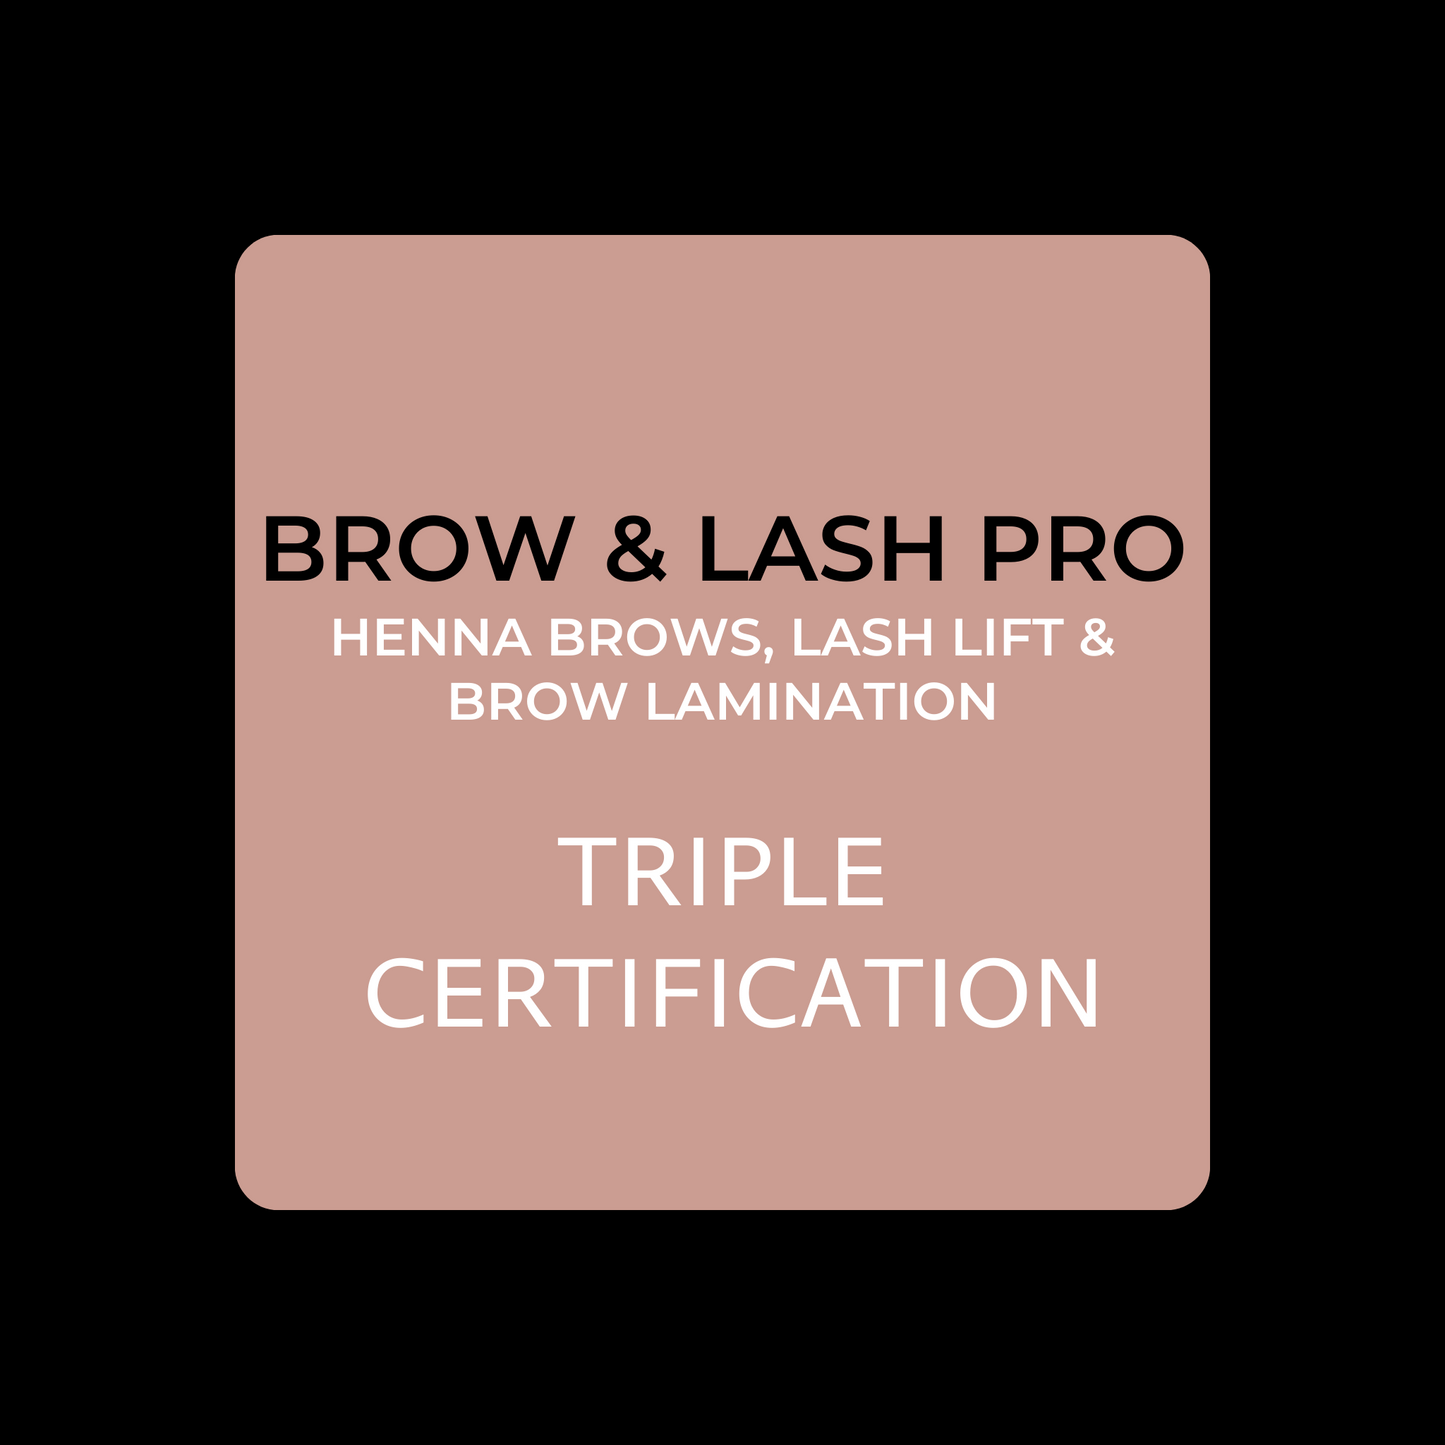 BROW & LASH PRO - LEARN HENNA BROWS, BROW LAMINATION & LASH LIFT